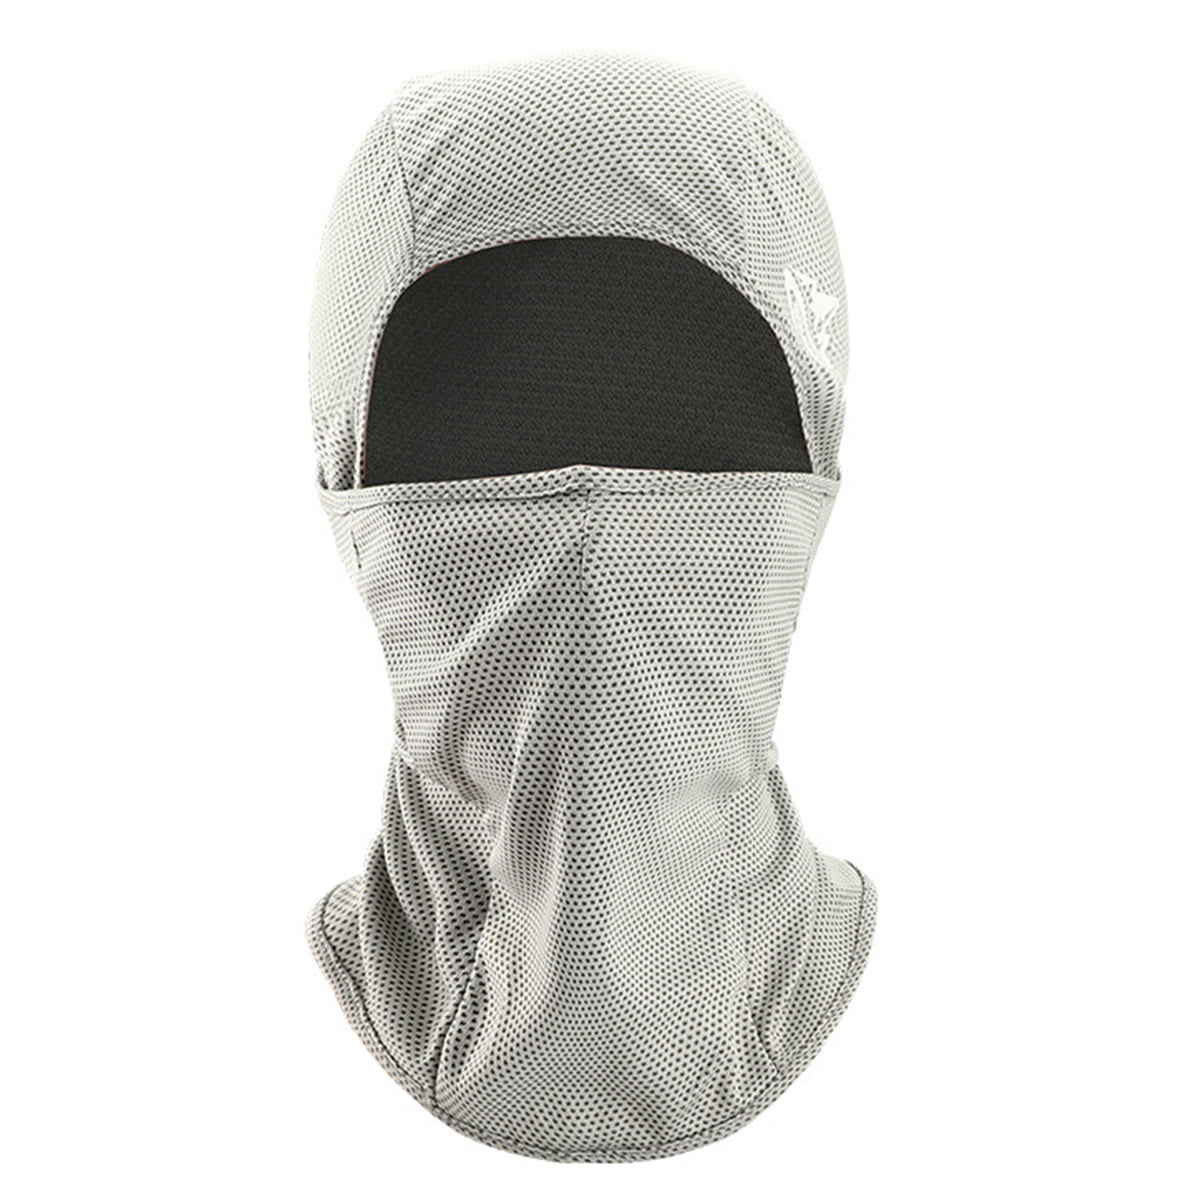 Balaclava Ski Face Mask UV Shield Cycling Hood Tactical Camo Masks for Men Women